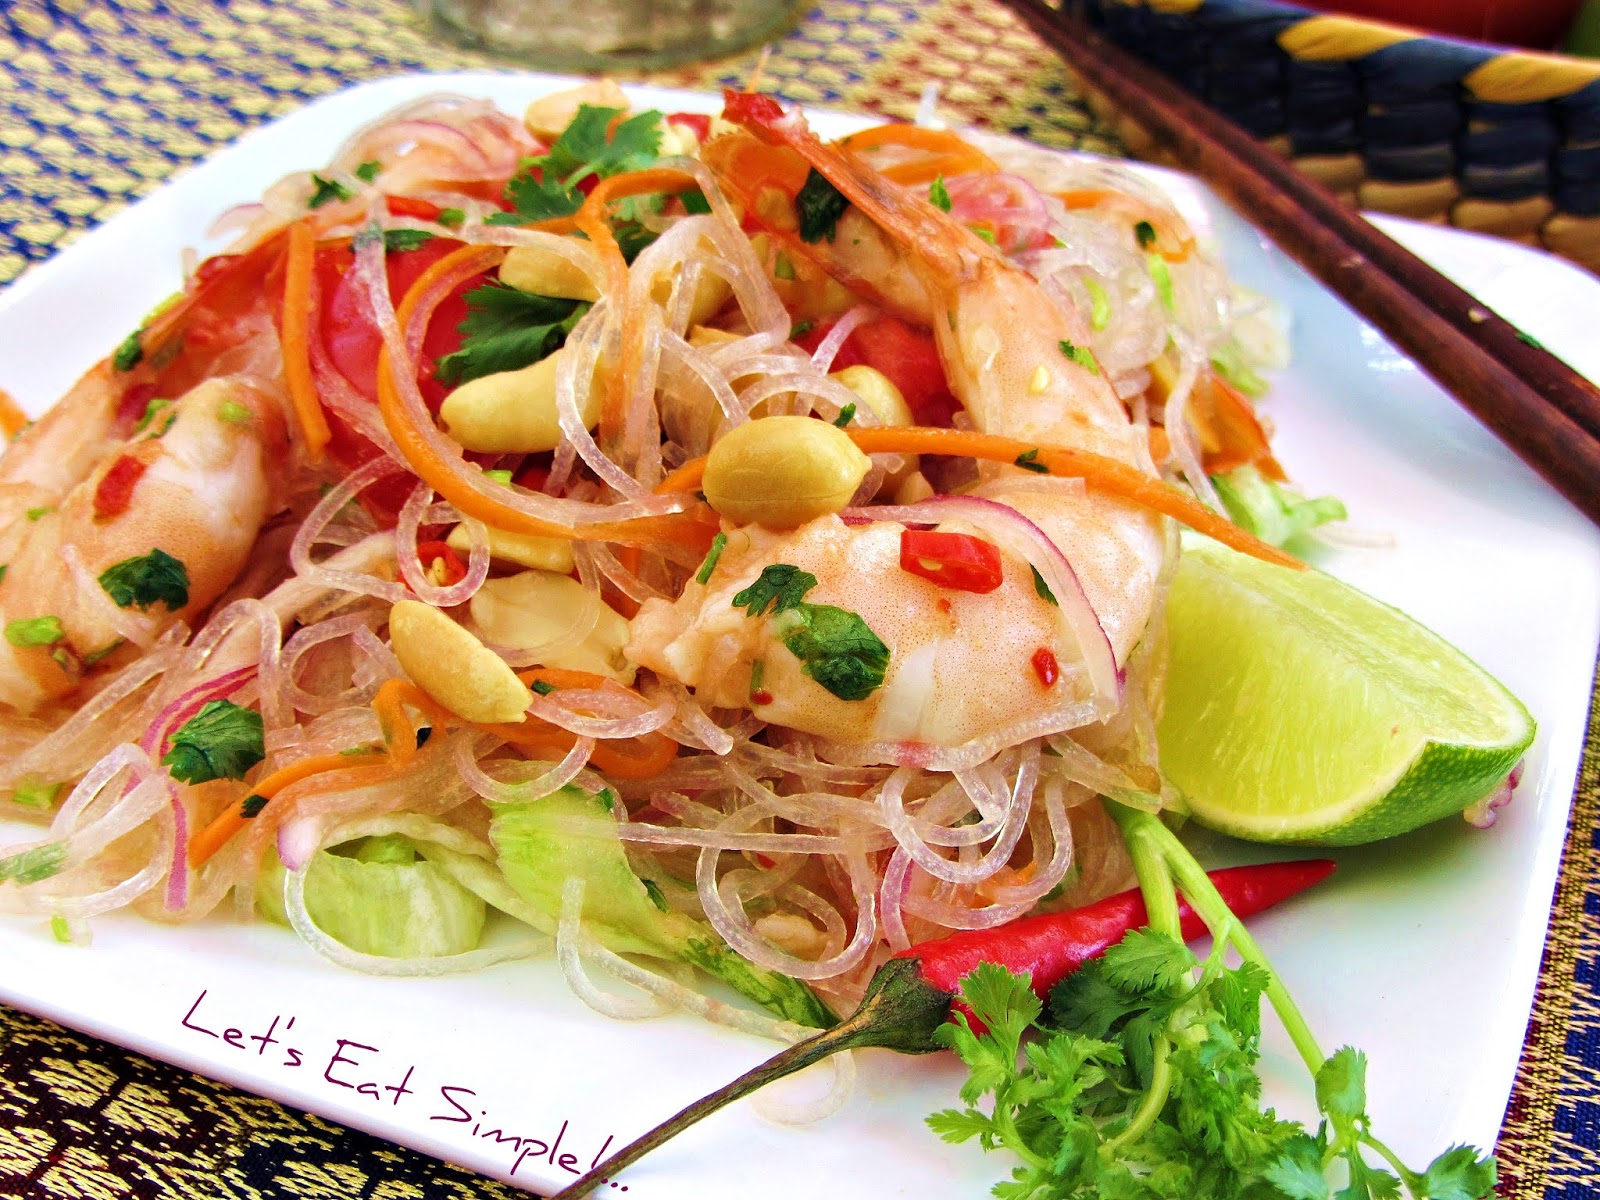 Oprechtheid Isoleren Picasso Let's eat......simple!: Yum-Woon-Sen Goong /Thai Spicy Glass Noodle Salad  with Shrimp